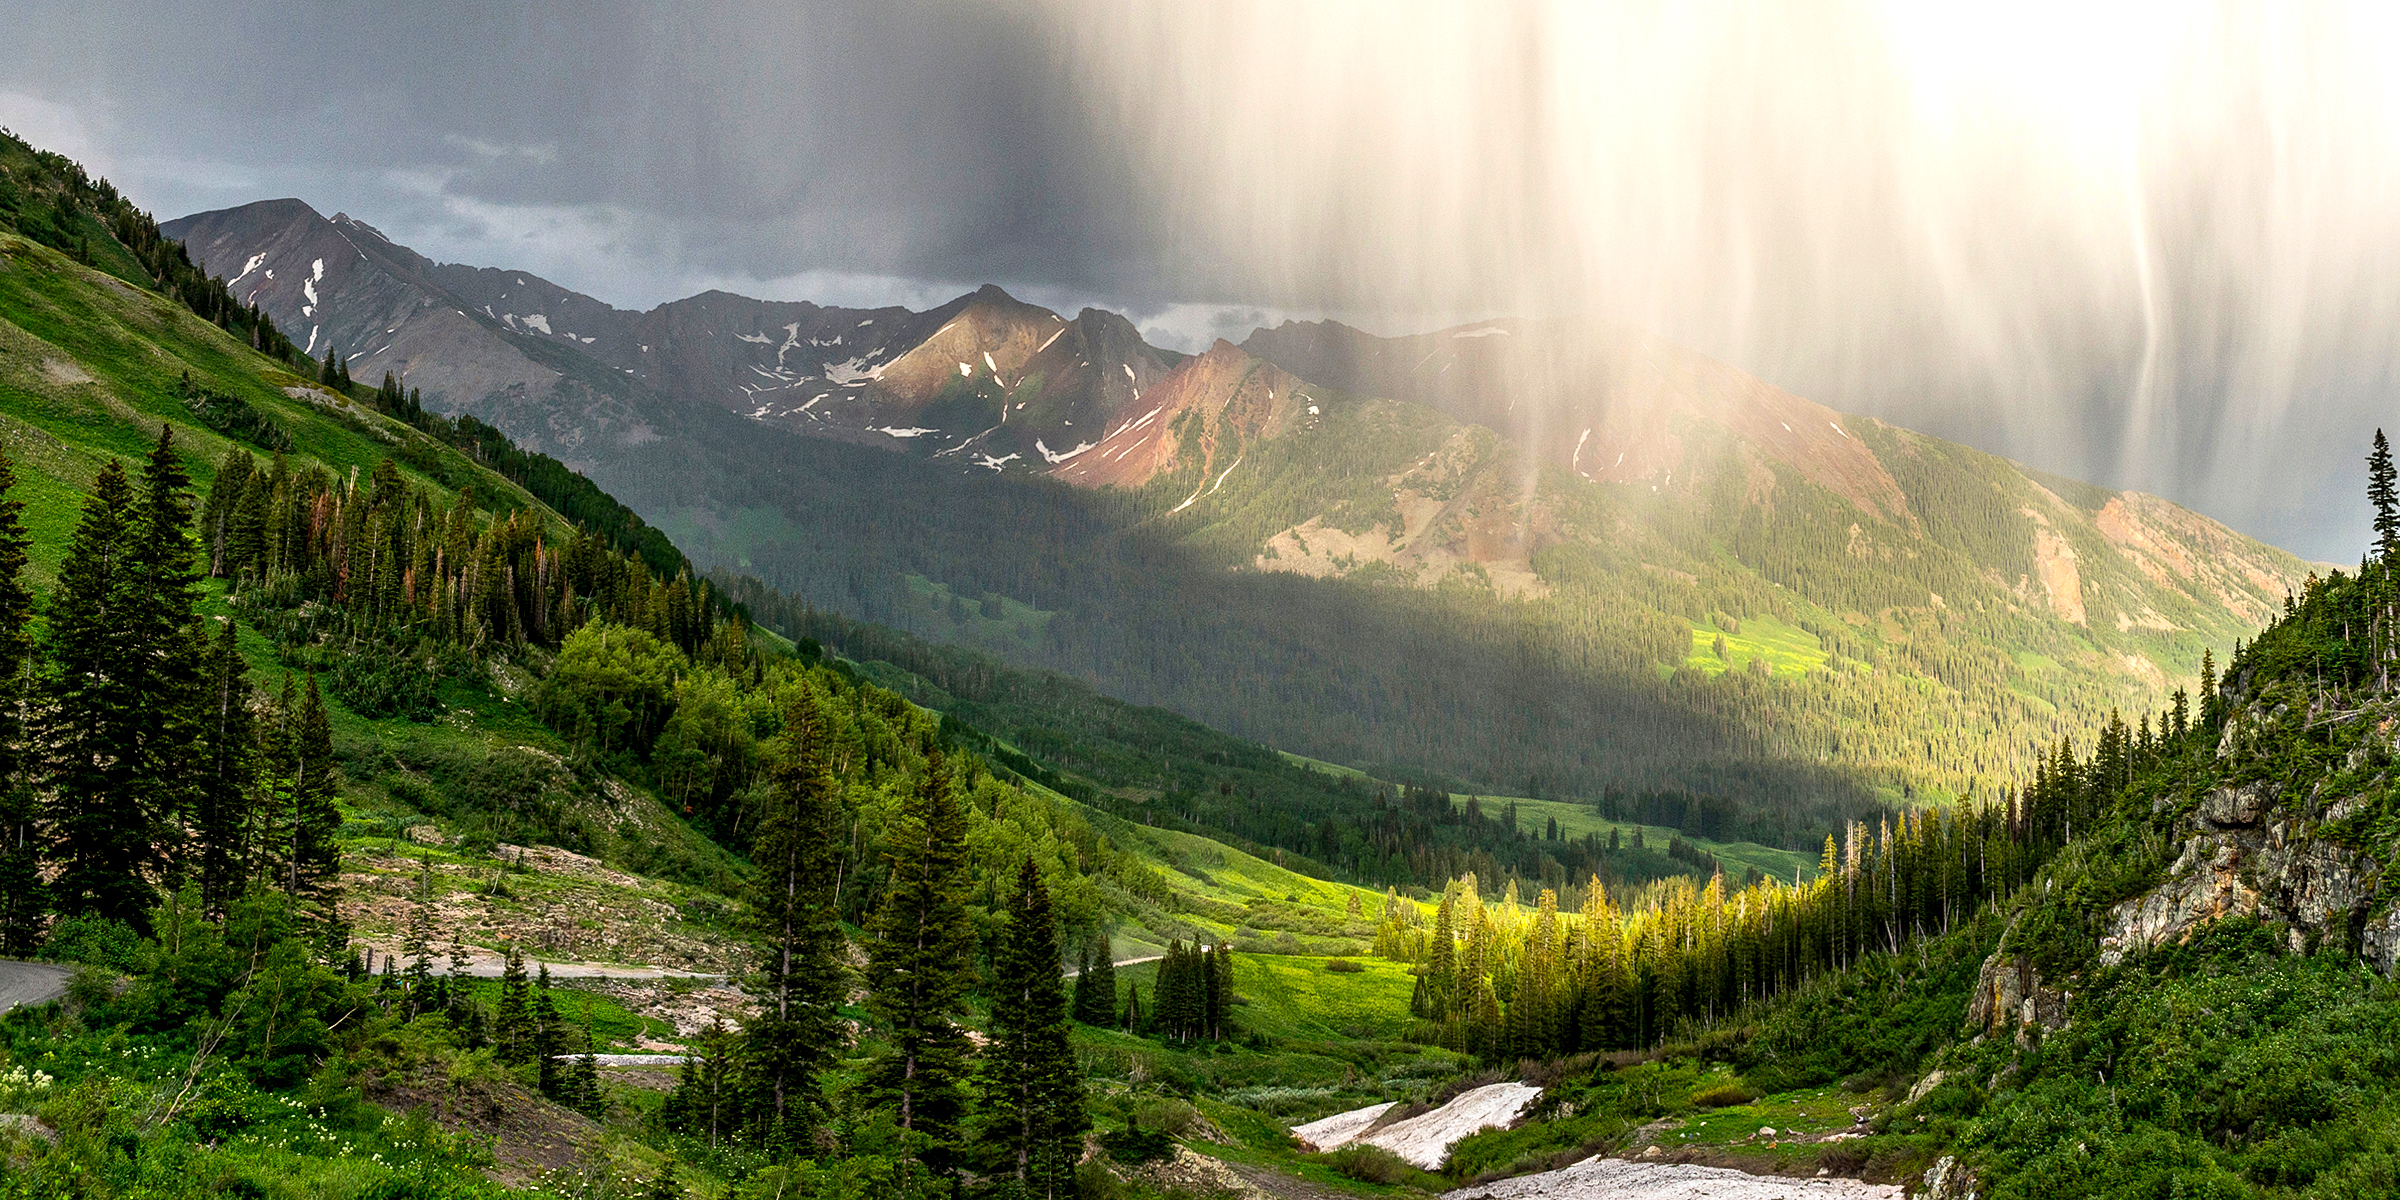 Mountain in Colorado | Source: Shutterstock